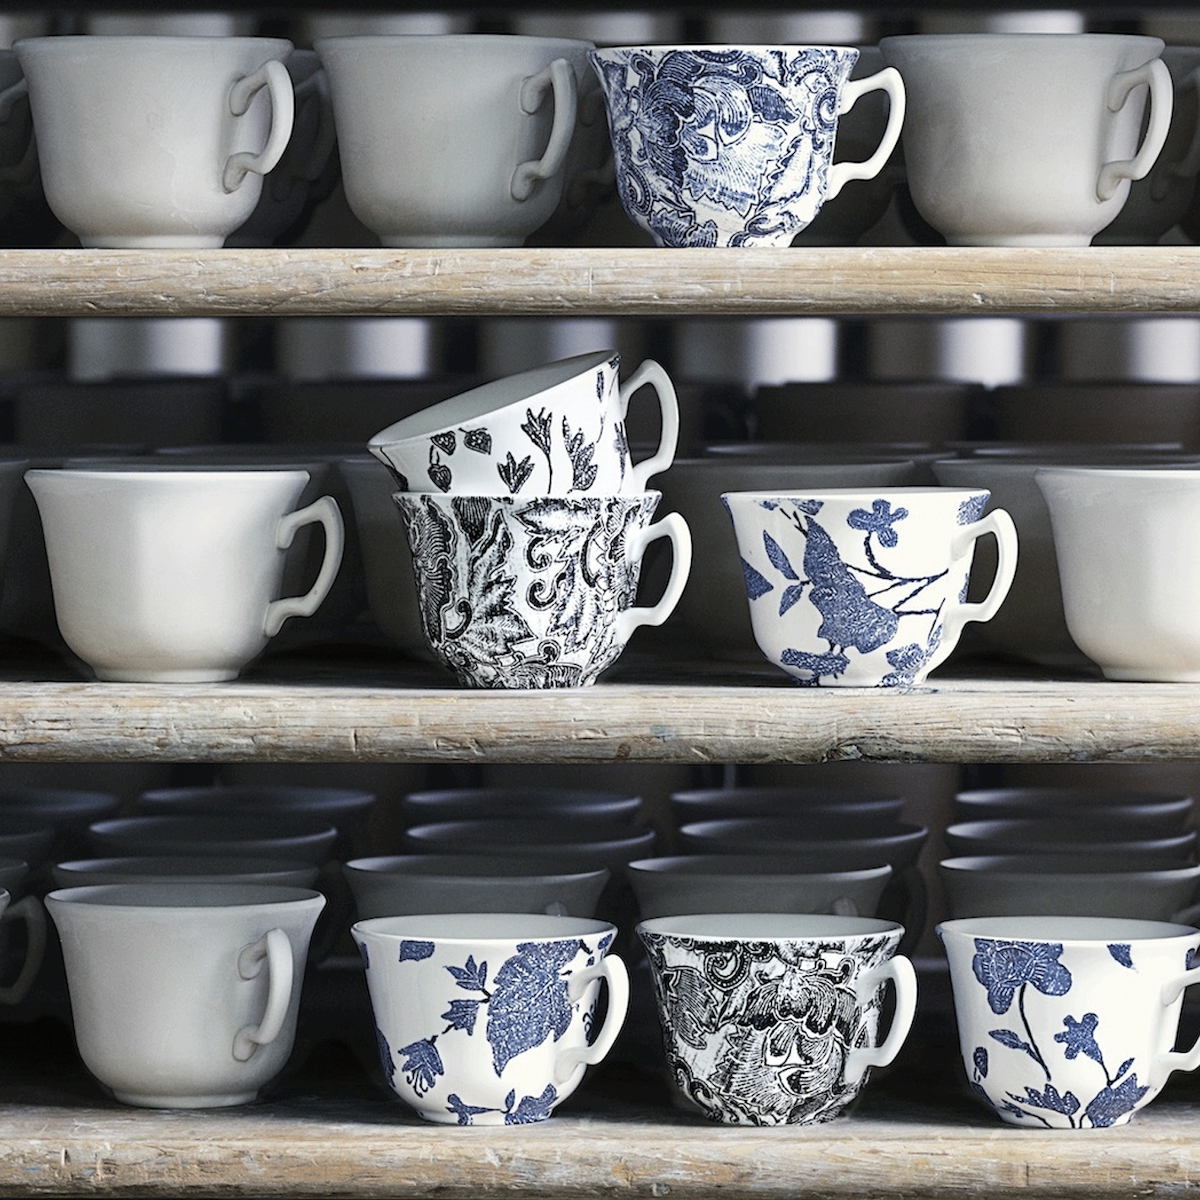 Ralph Lauren Burleigh collection cups on shelves